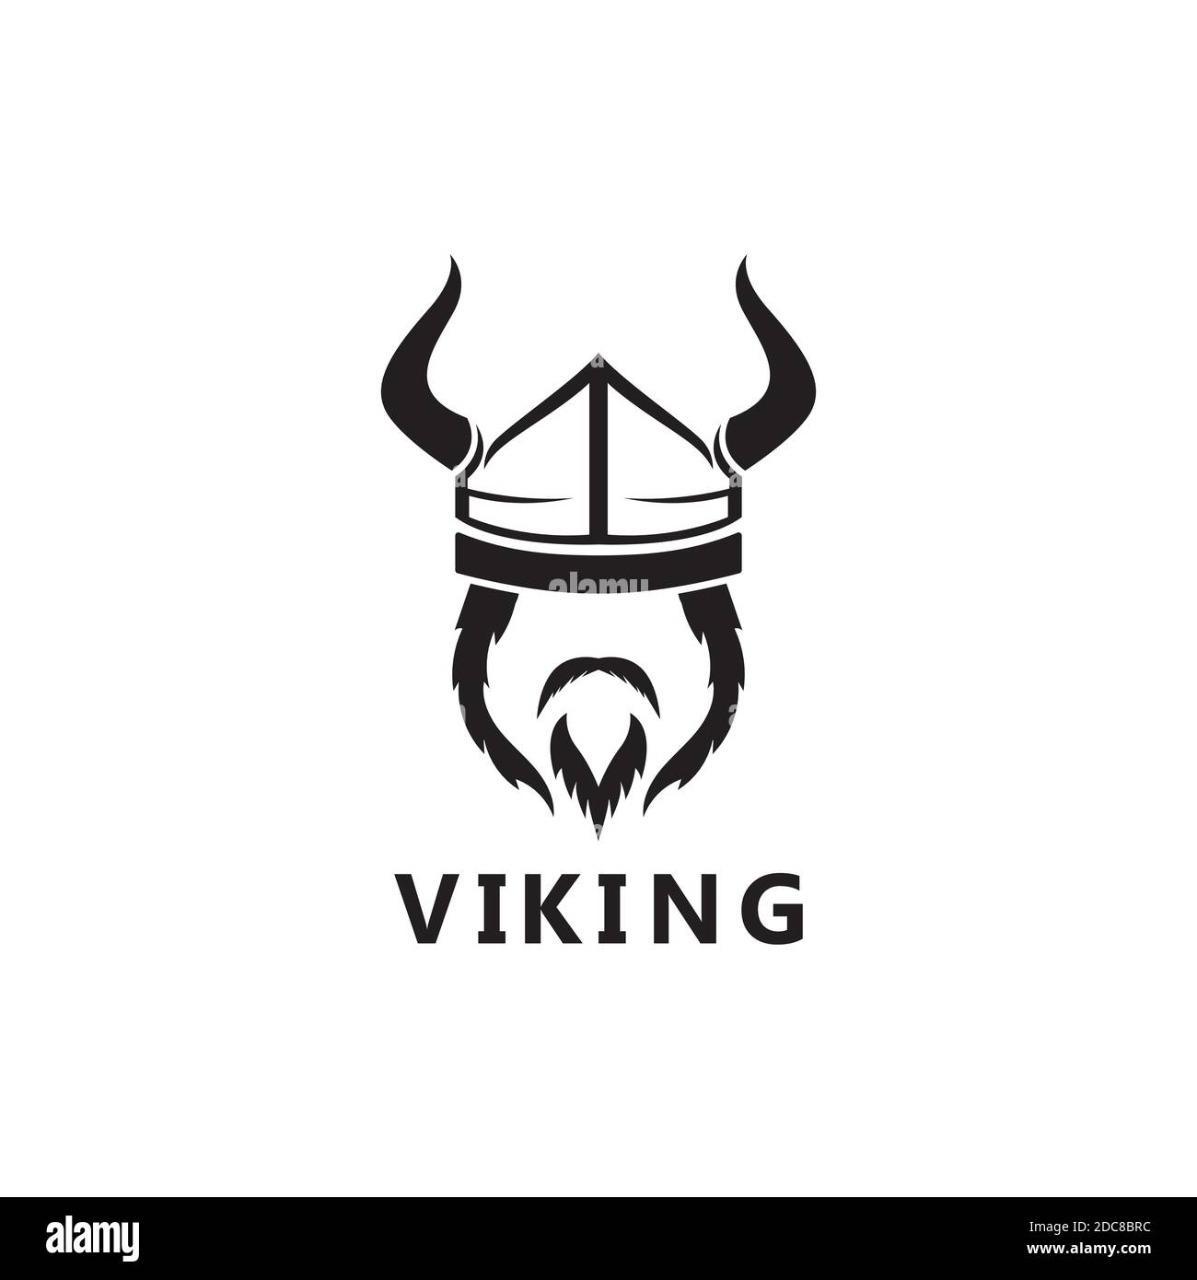 Vikingo95?s=x+rhuibgic2dfcqddqdewg1fmsgcvyv5qlra95rqdag=